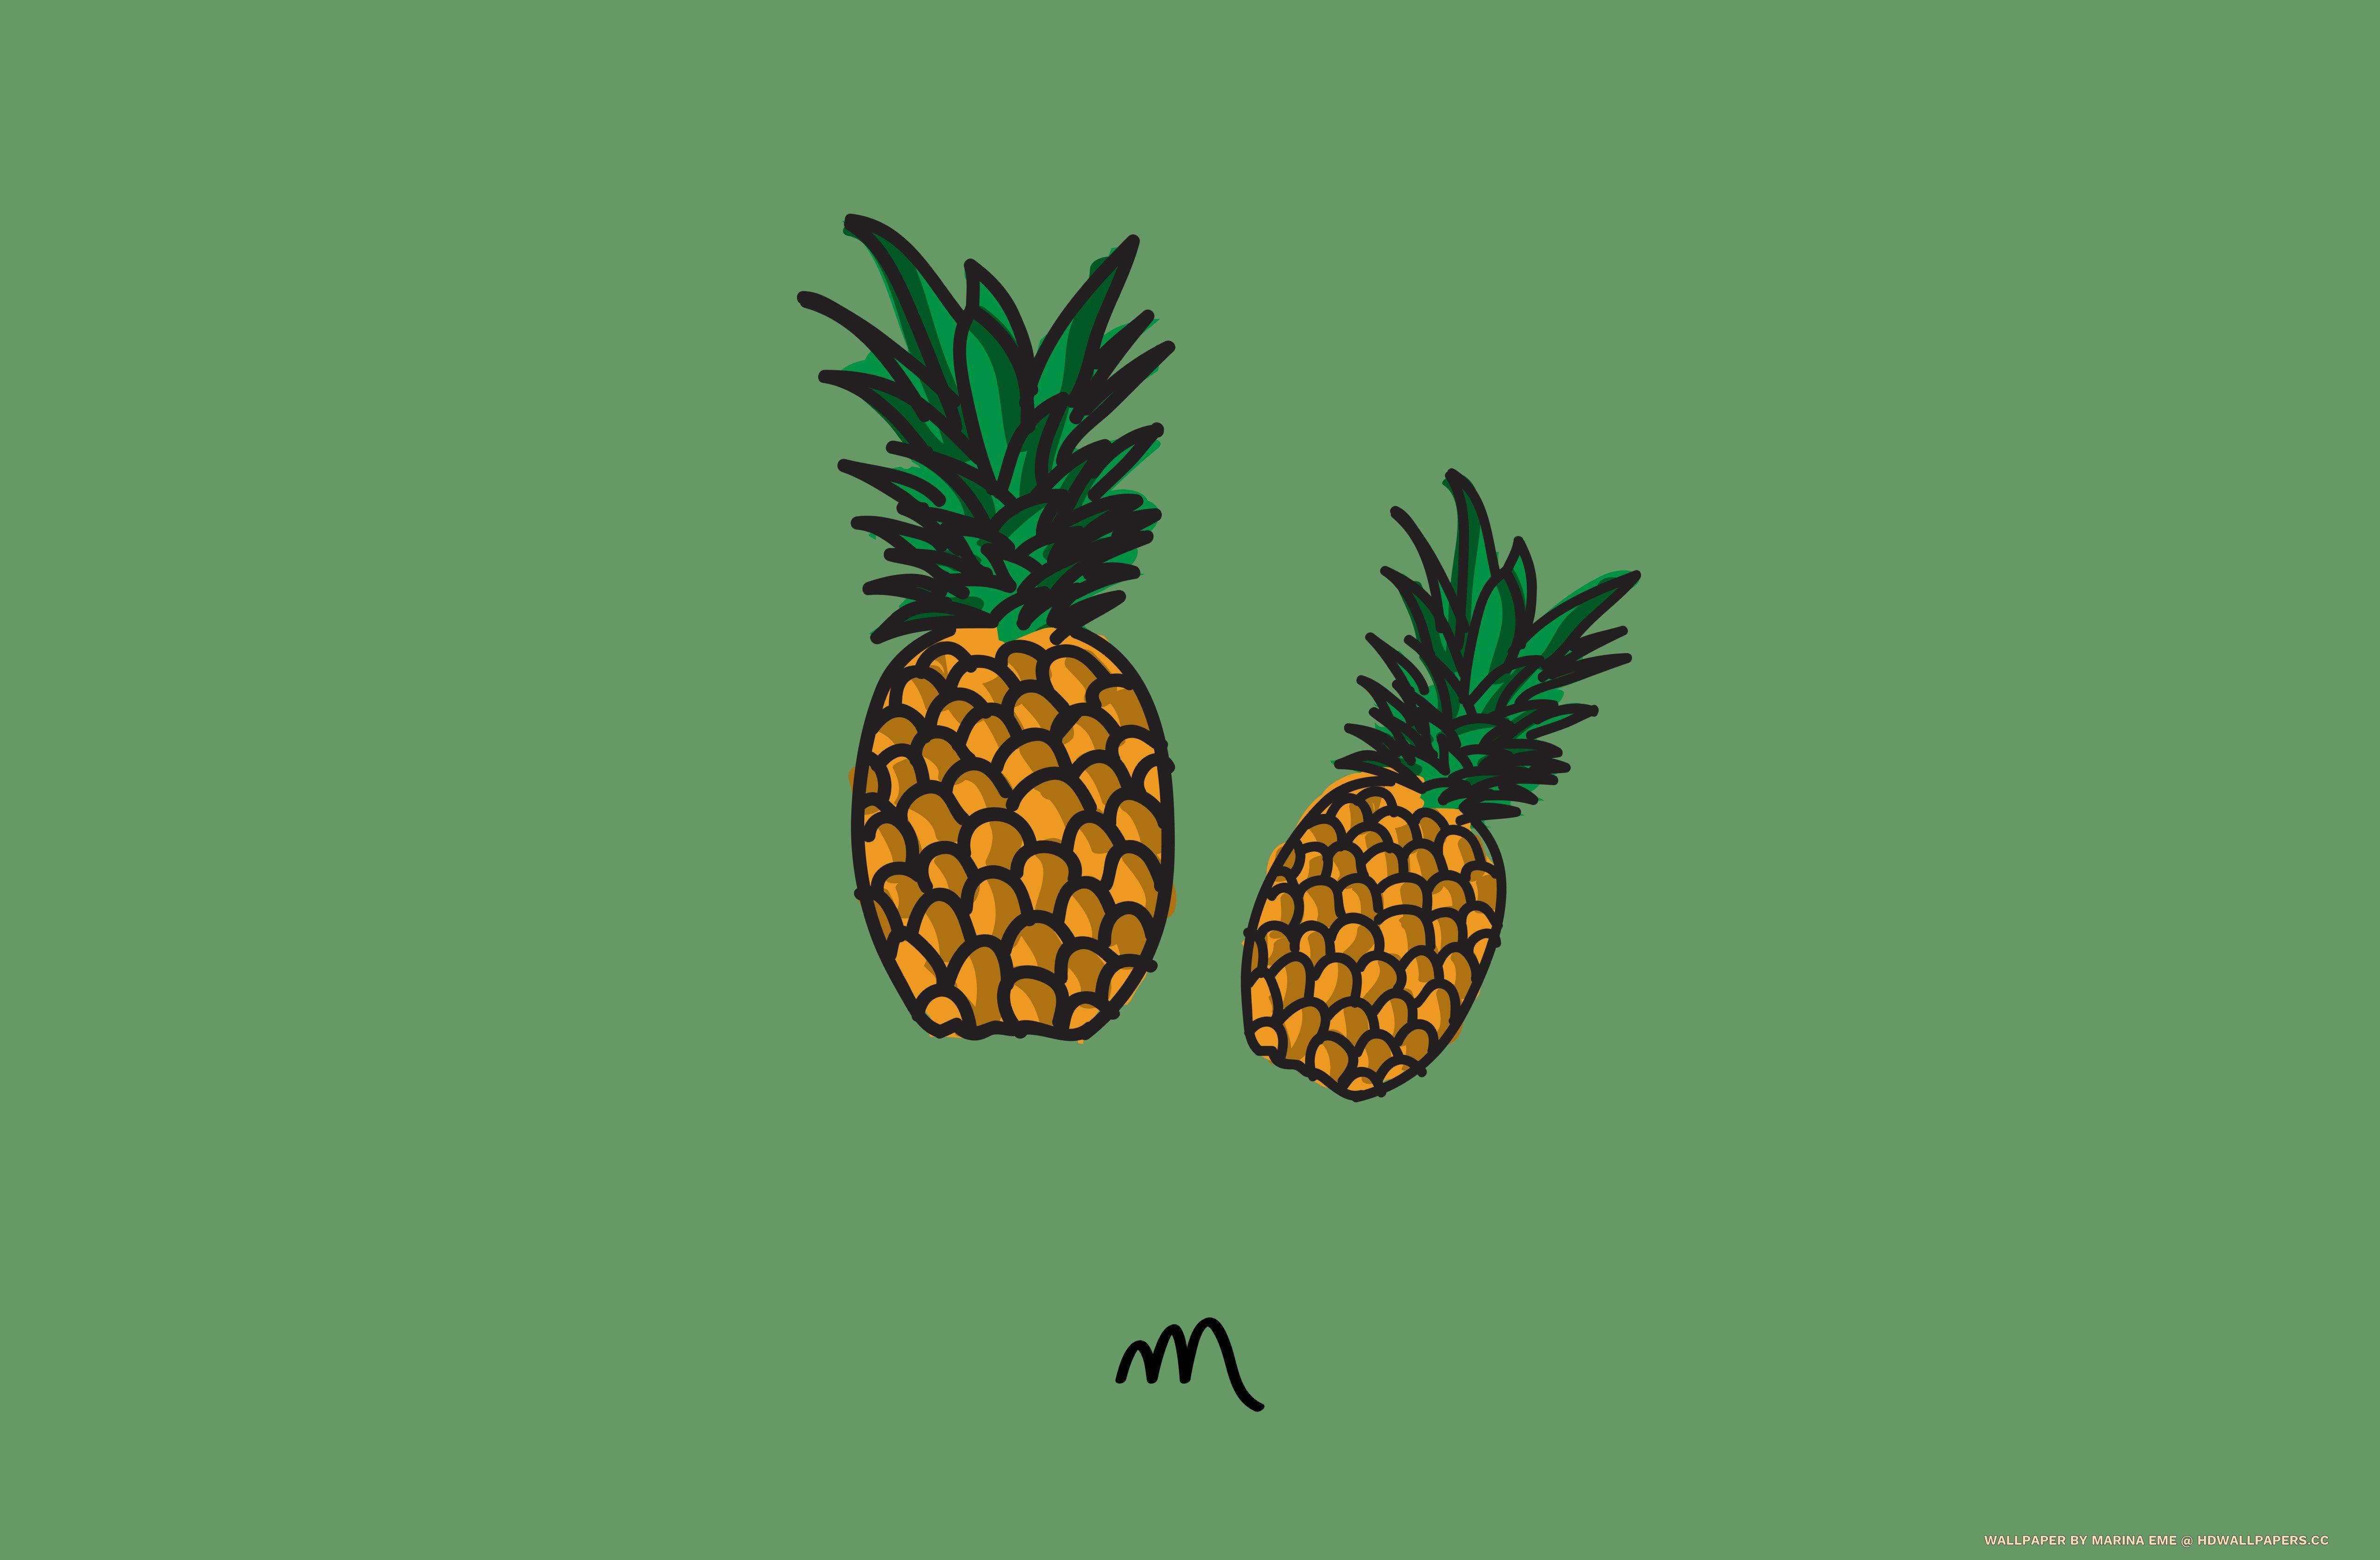 Eme's pineapple